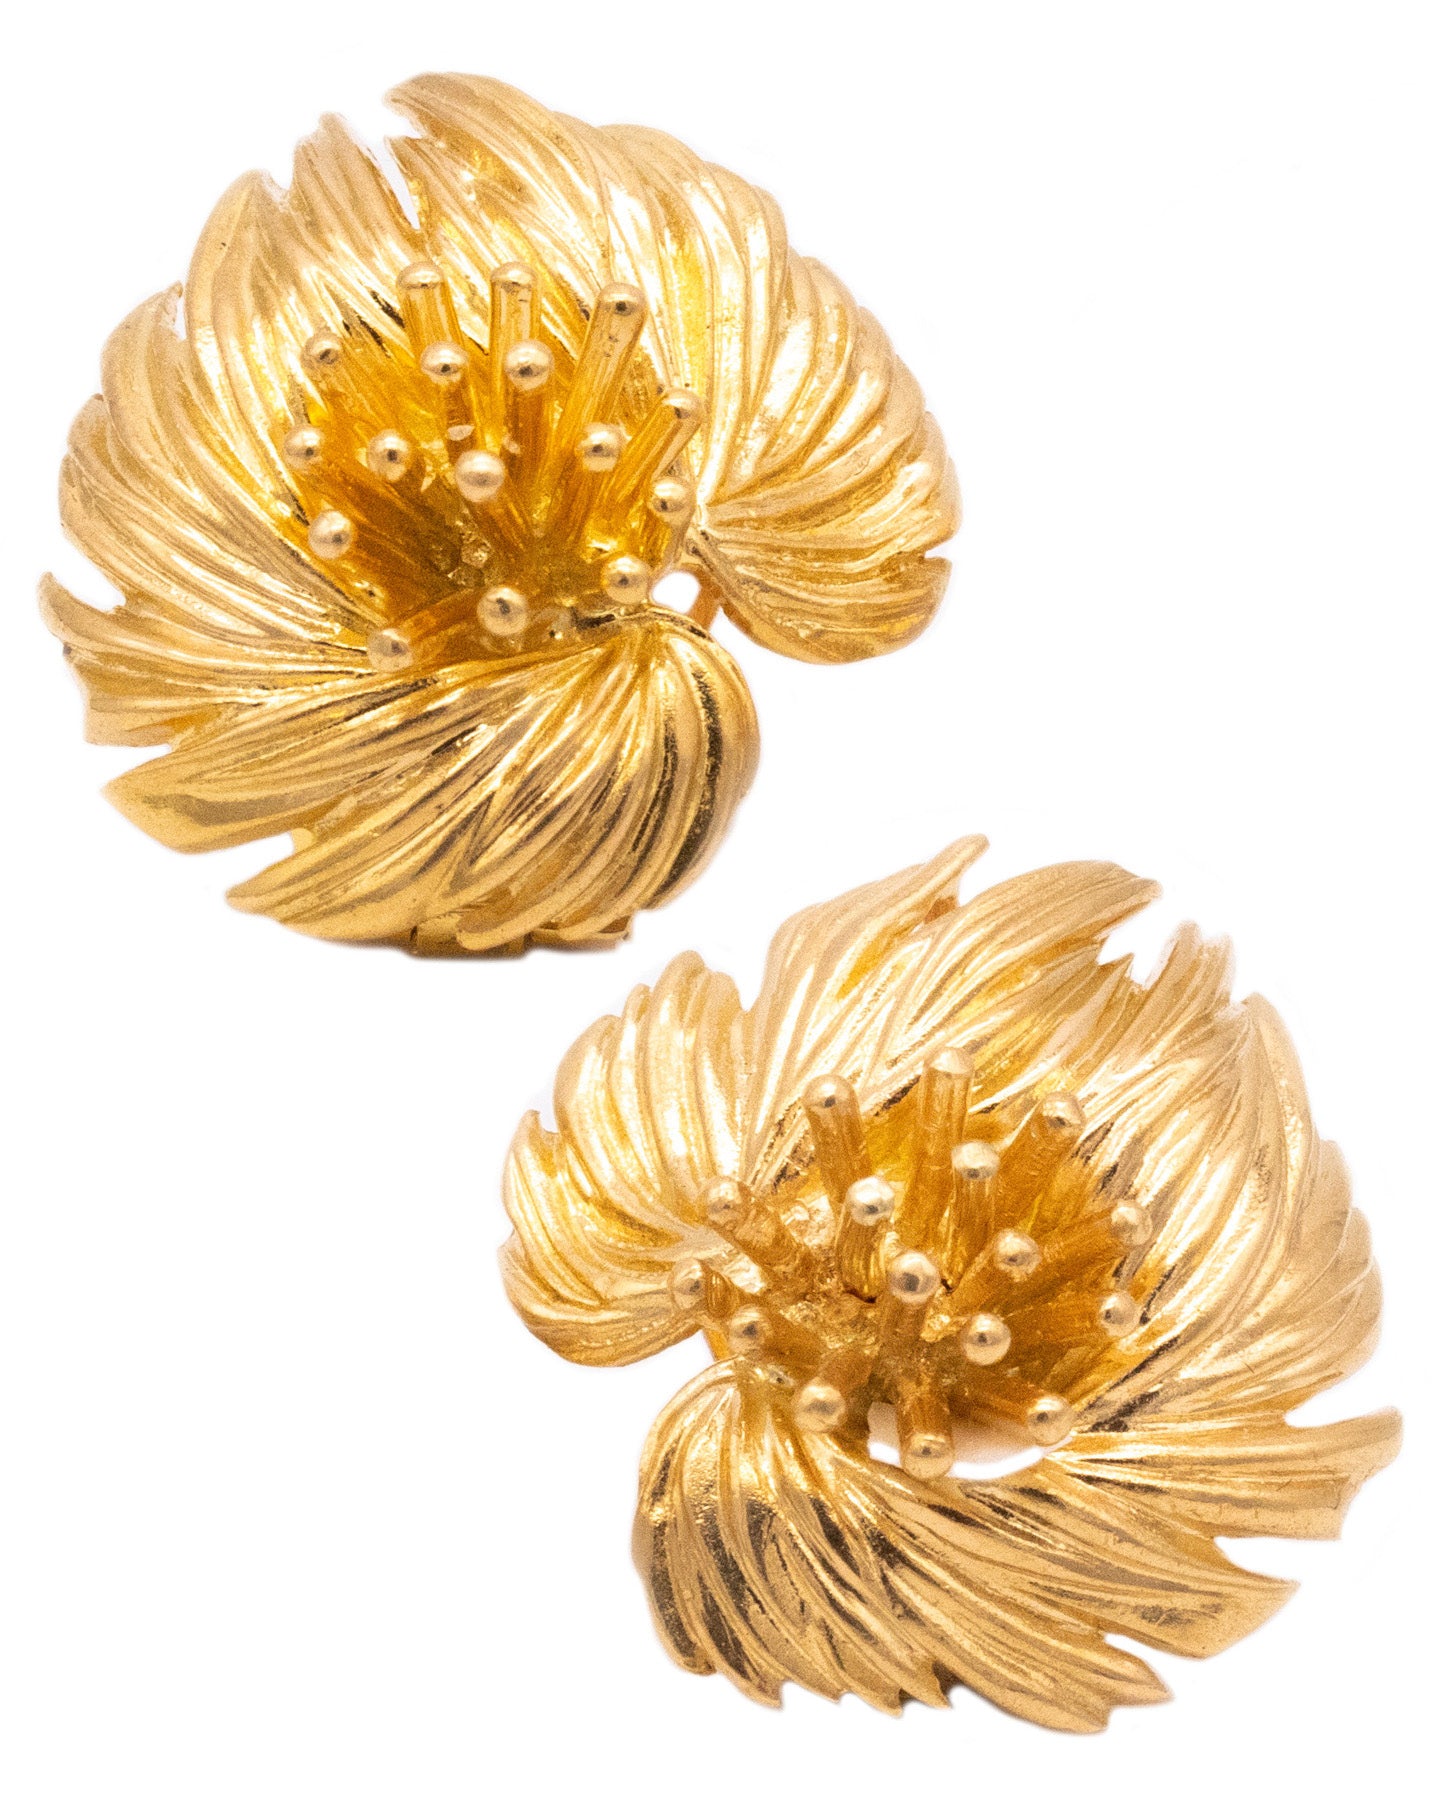 Van Cleef And Arpels 1959 Paris Organic Textured Earrings In 18Kt Yellow Gold